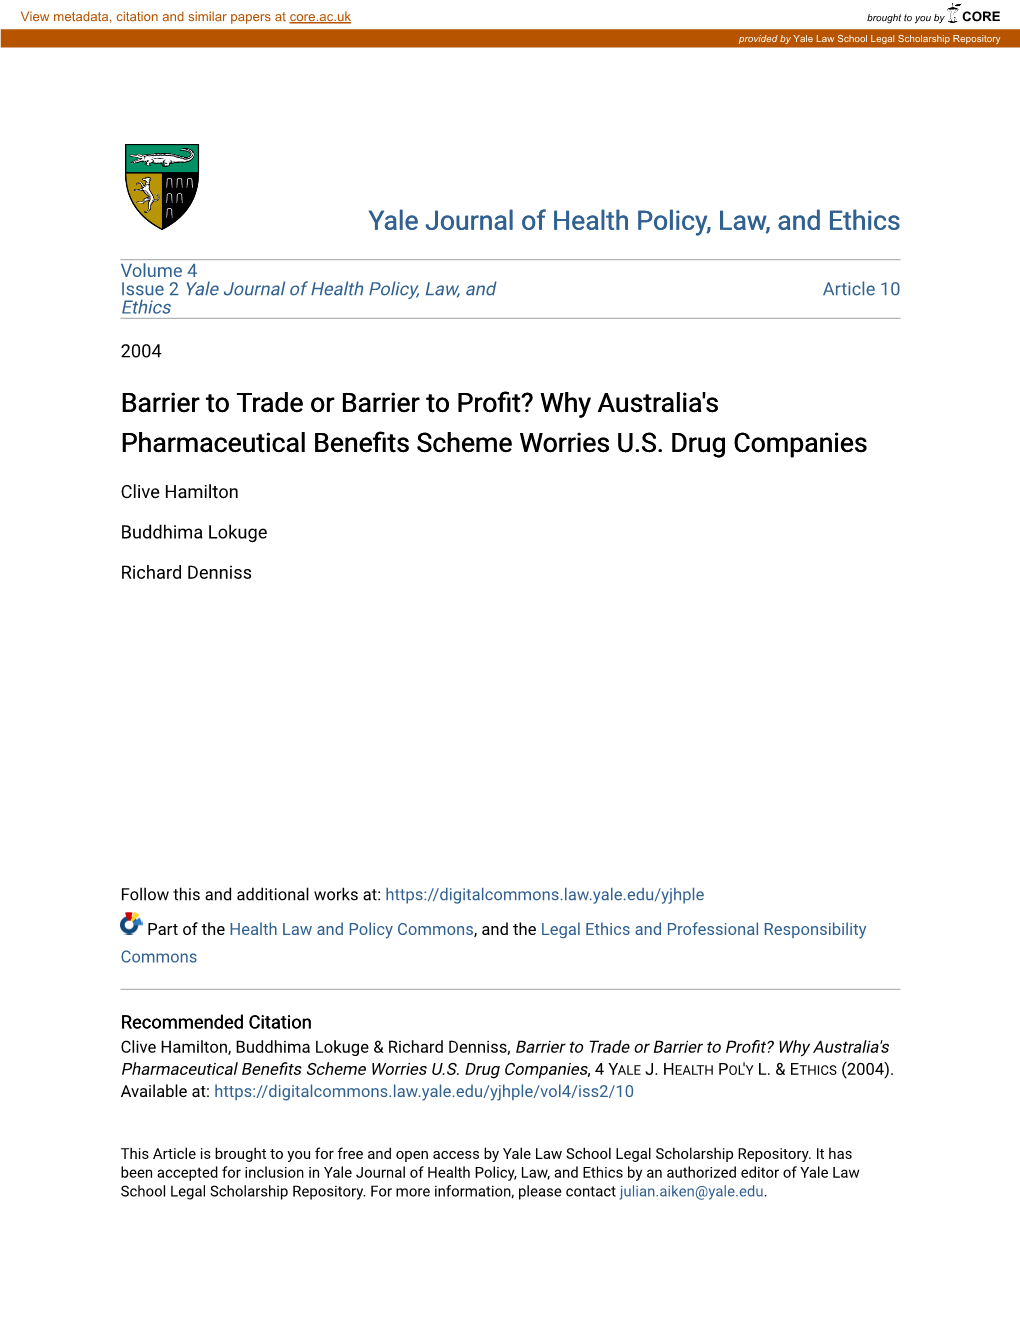 Why Australia's Pharmaceutical Benefits Scheme Worries U.S